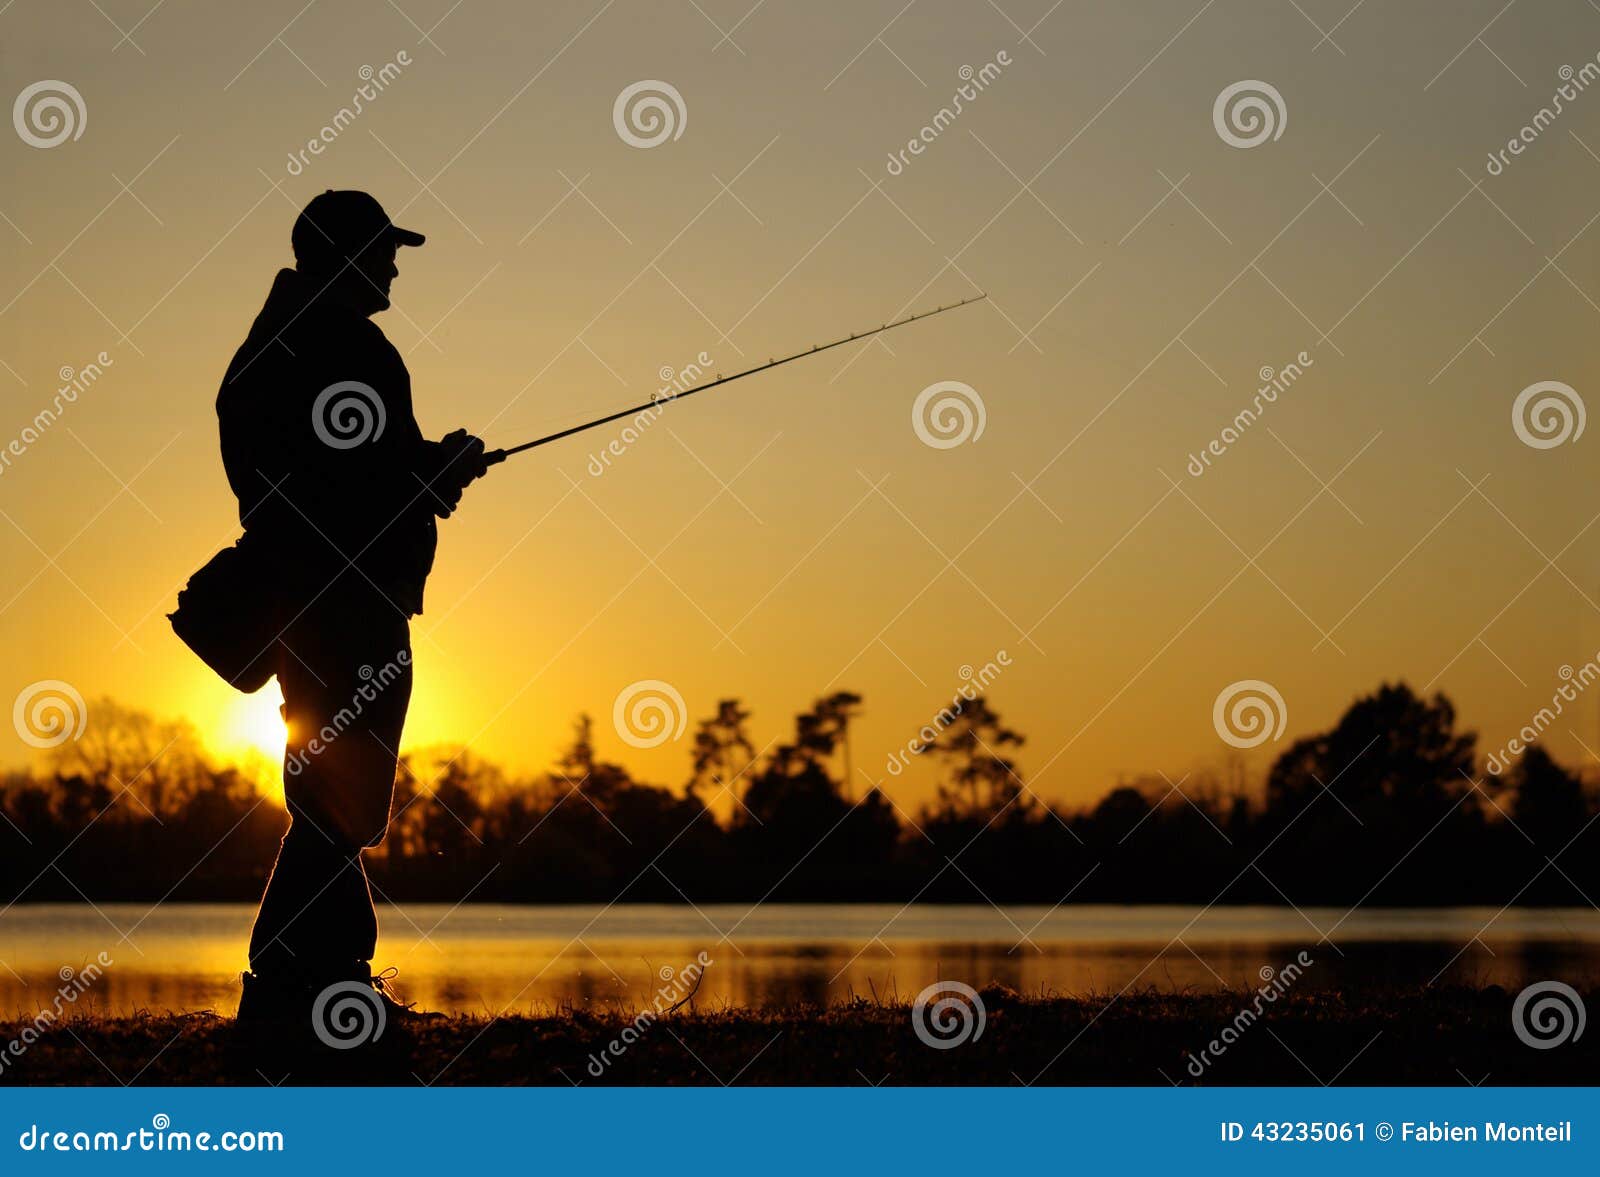 18,438 Fishing Rod Lure Stock Photos - Free & Royalty-Free Stock